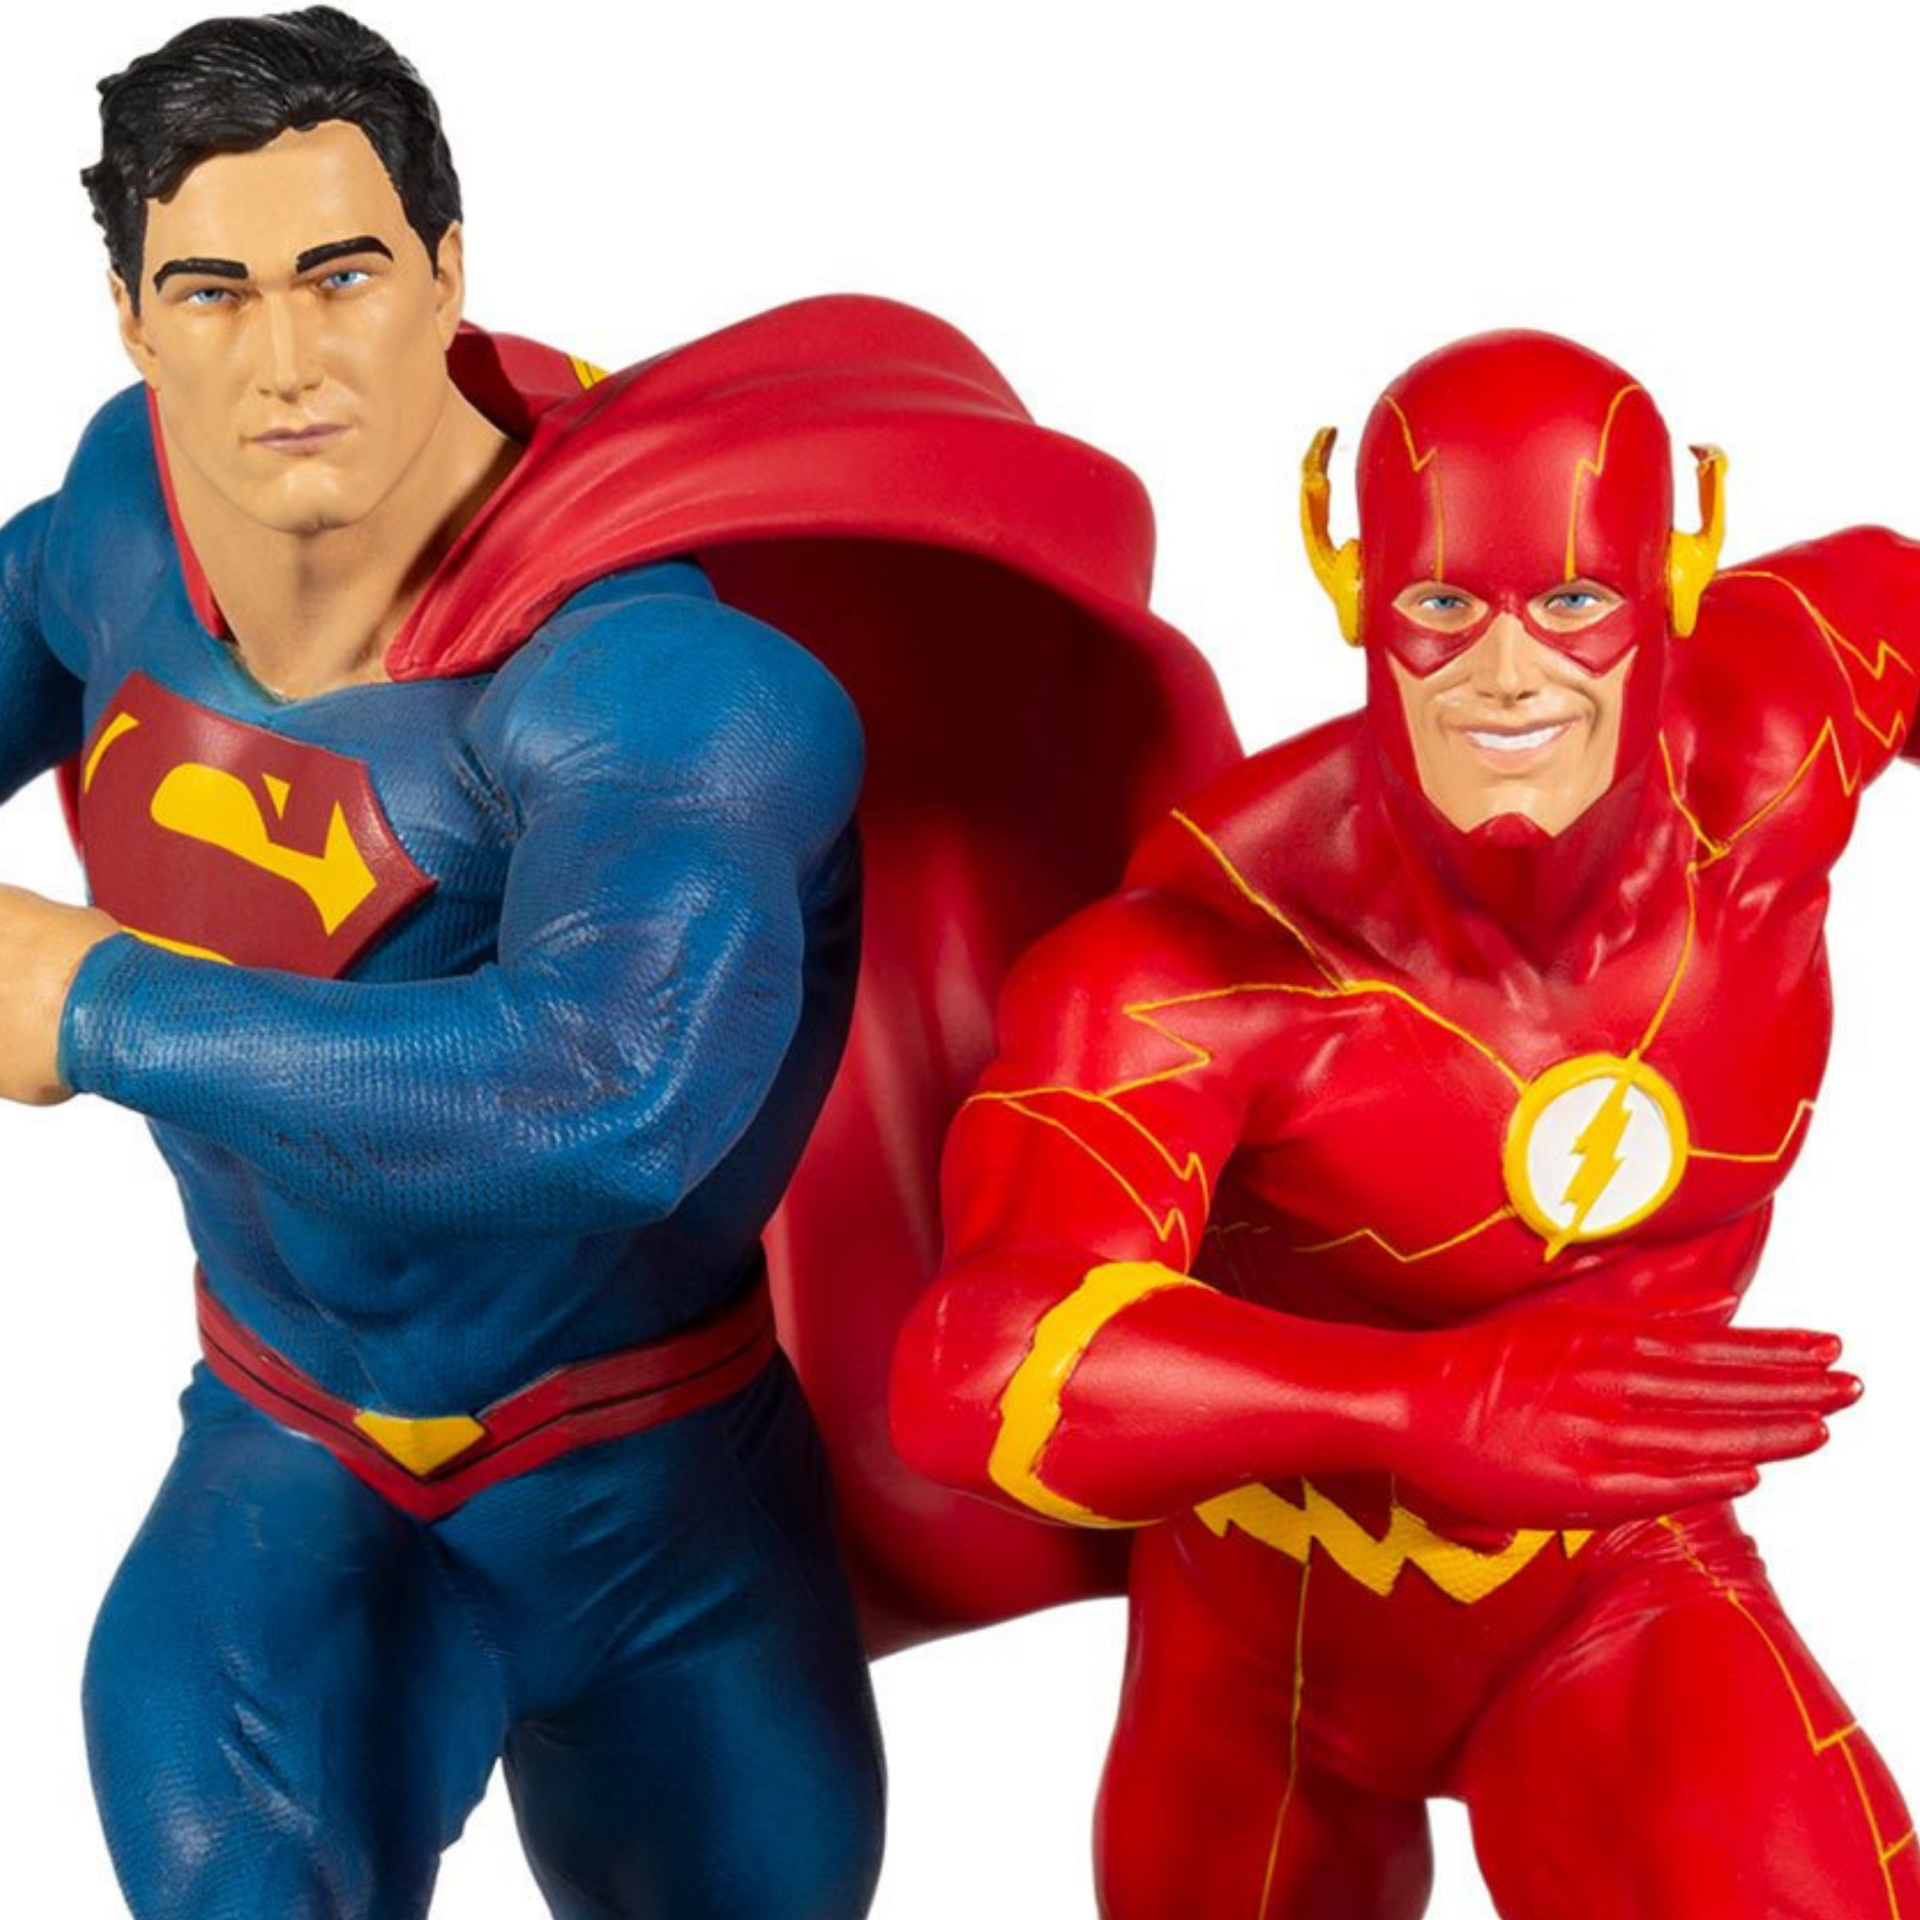 DC Direct DC Battle Statue Series: Superman vs. The Flash Racing Heykel Figür